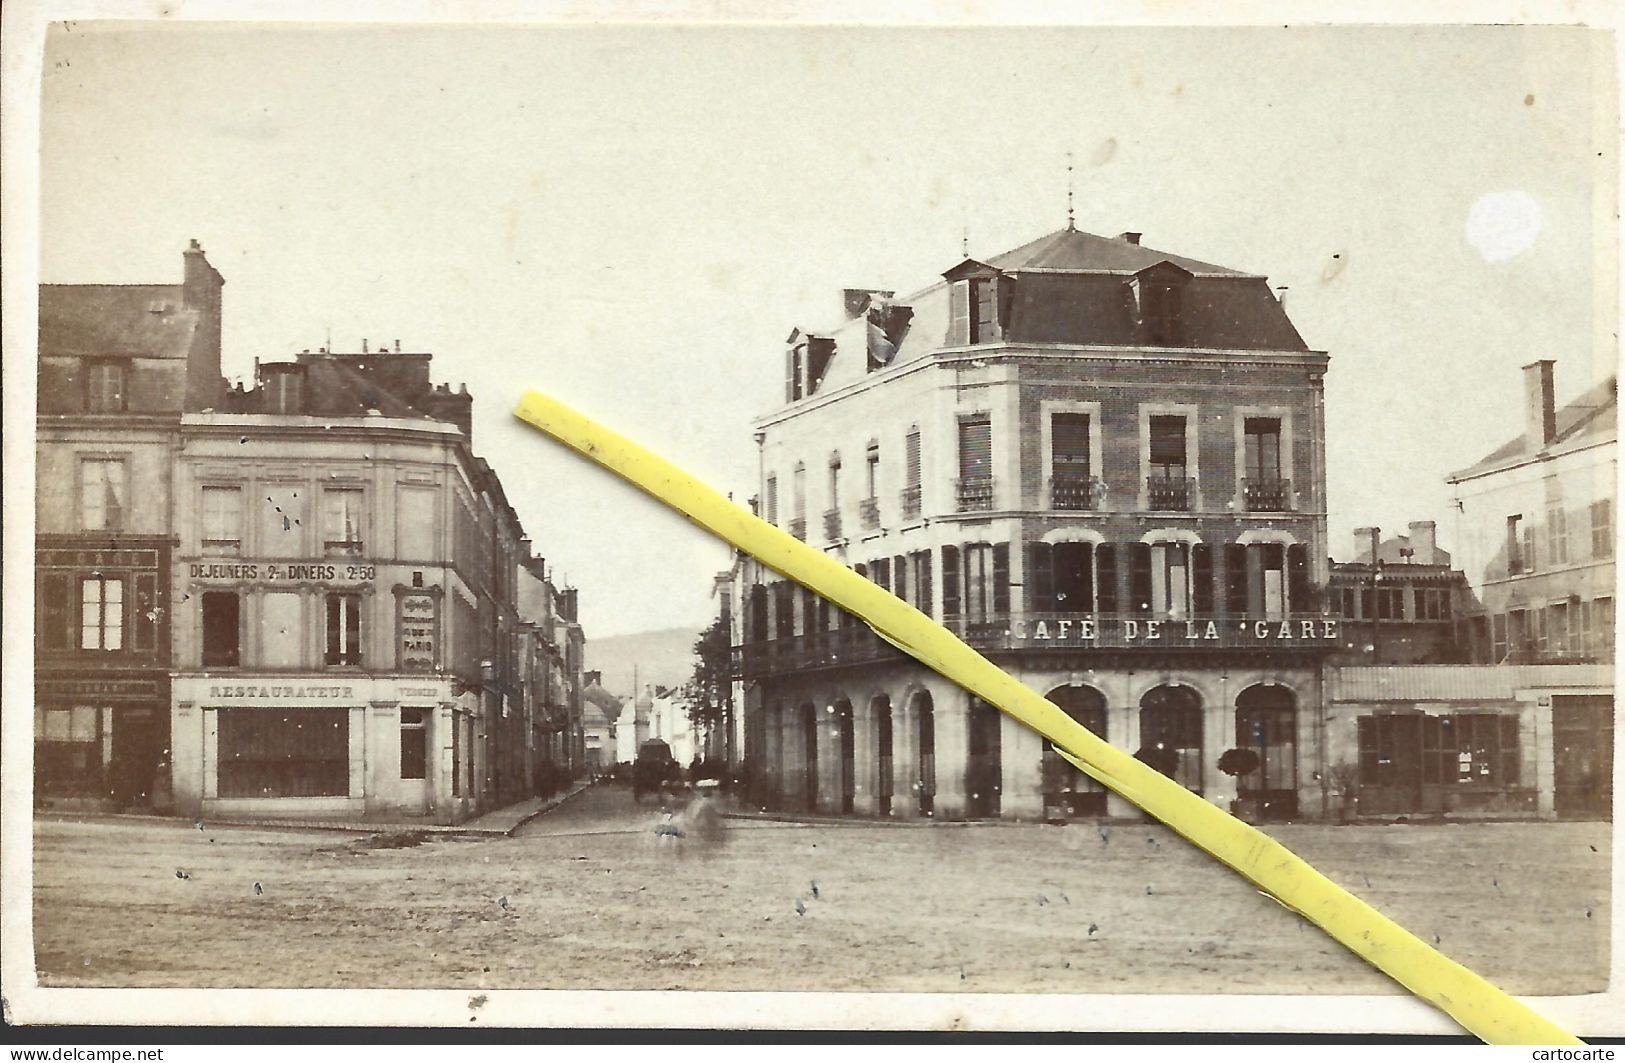 51 372 0524 MARNE EPERNAY CAFE DE LA GARE RESTAURANT DE PARIS   PHOTO G DURAND PERIODE 1870 / 1890 - Old (before 1900)